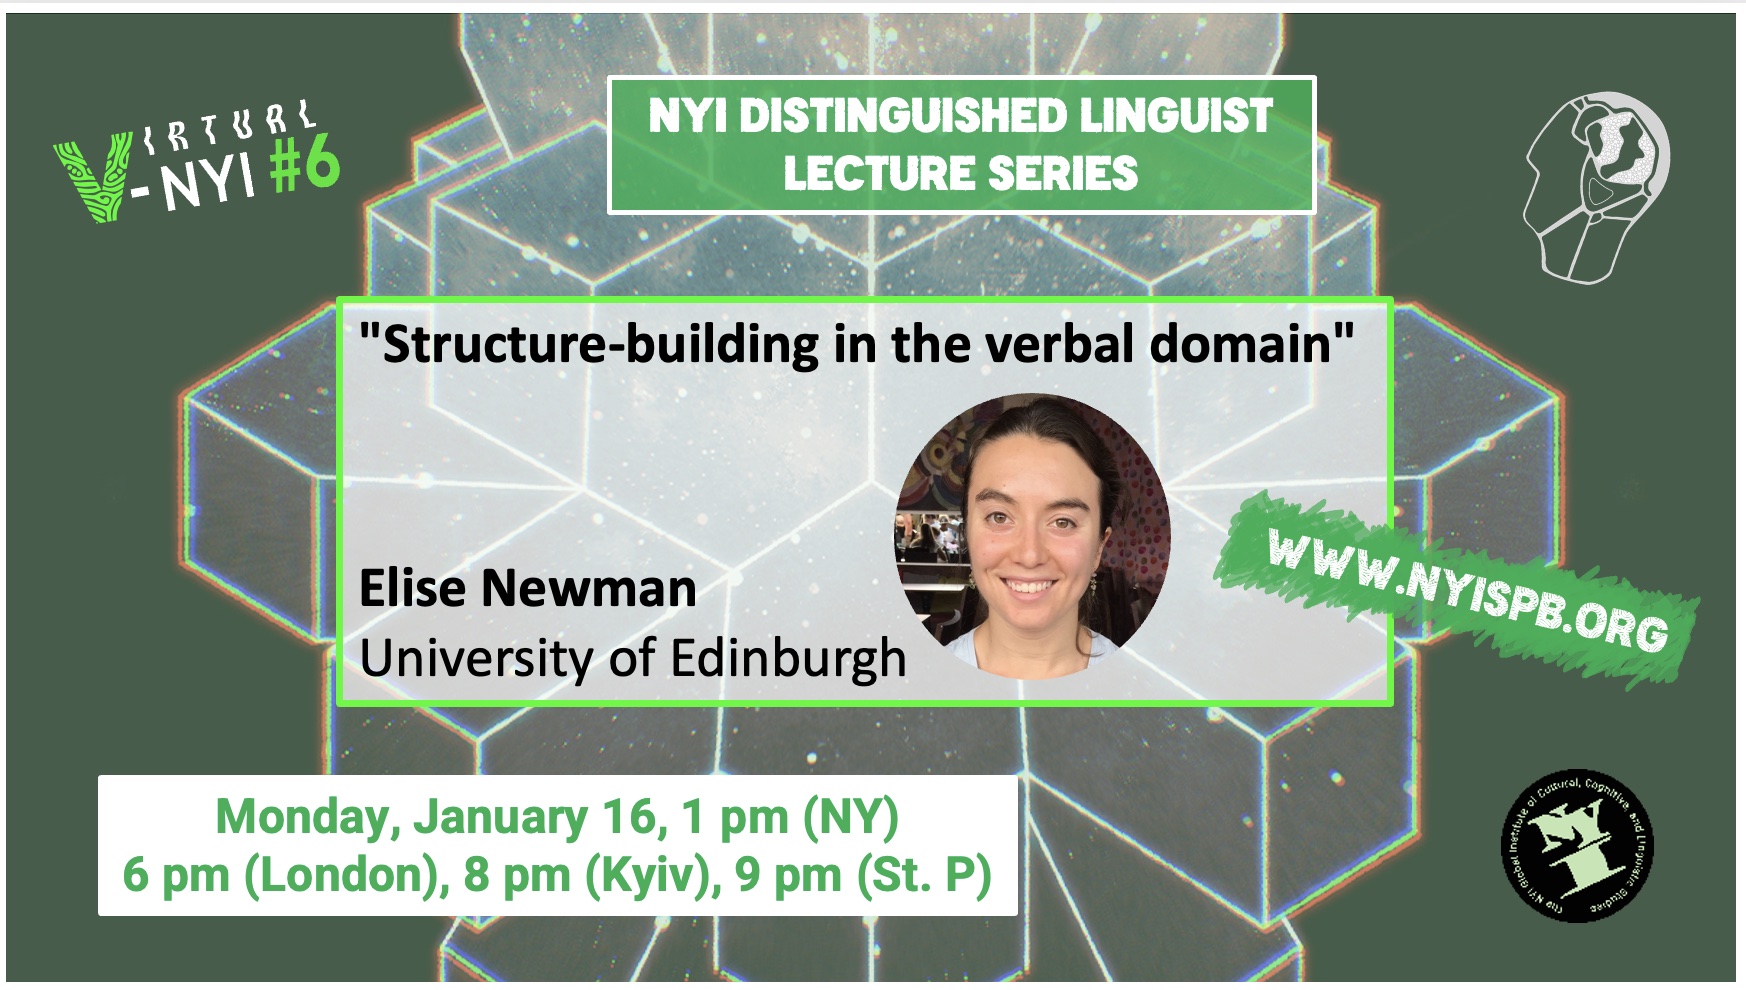 Distinguished Linguist Lecture #1: Elise Newman